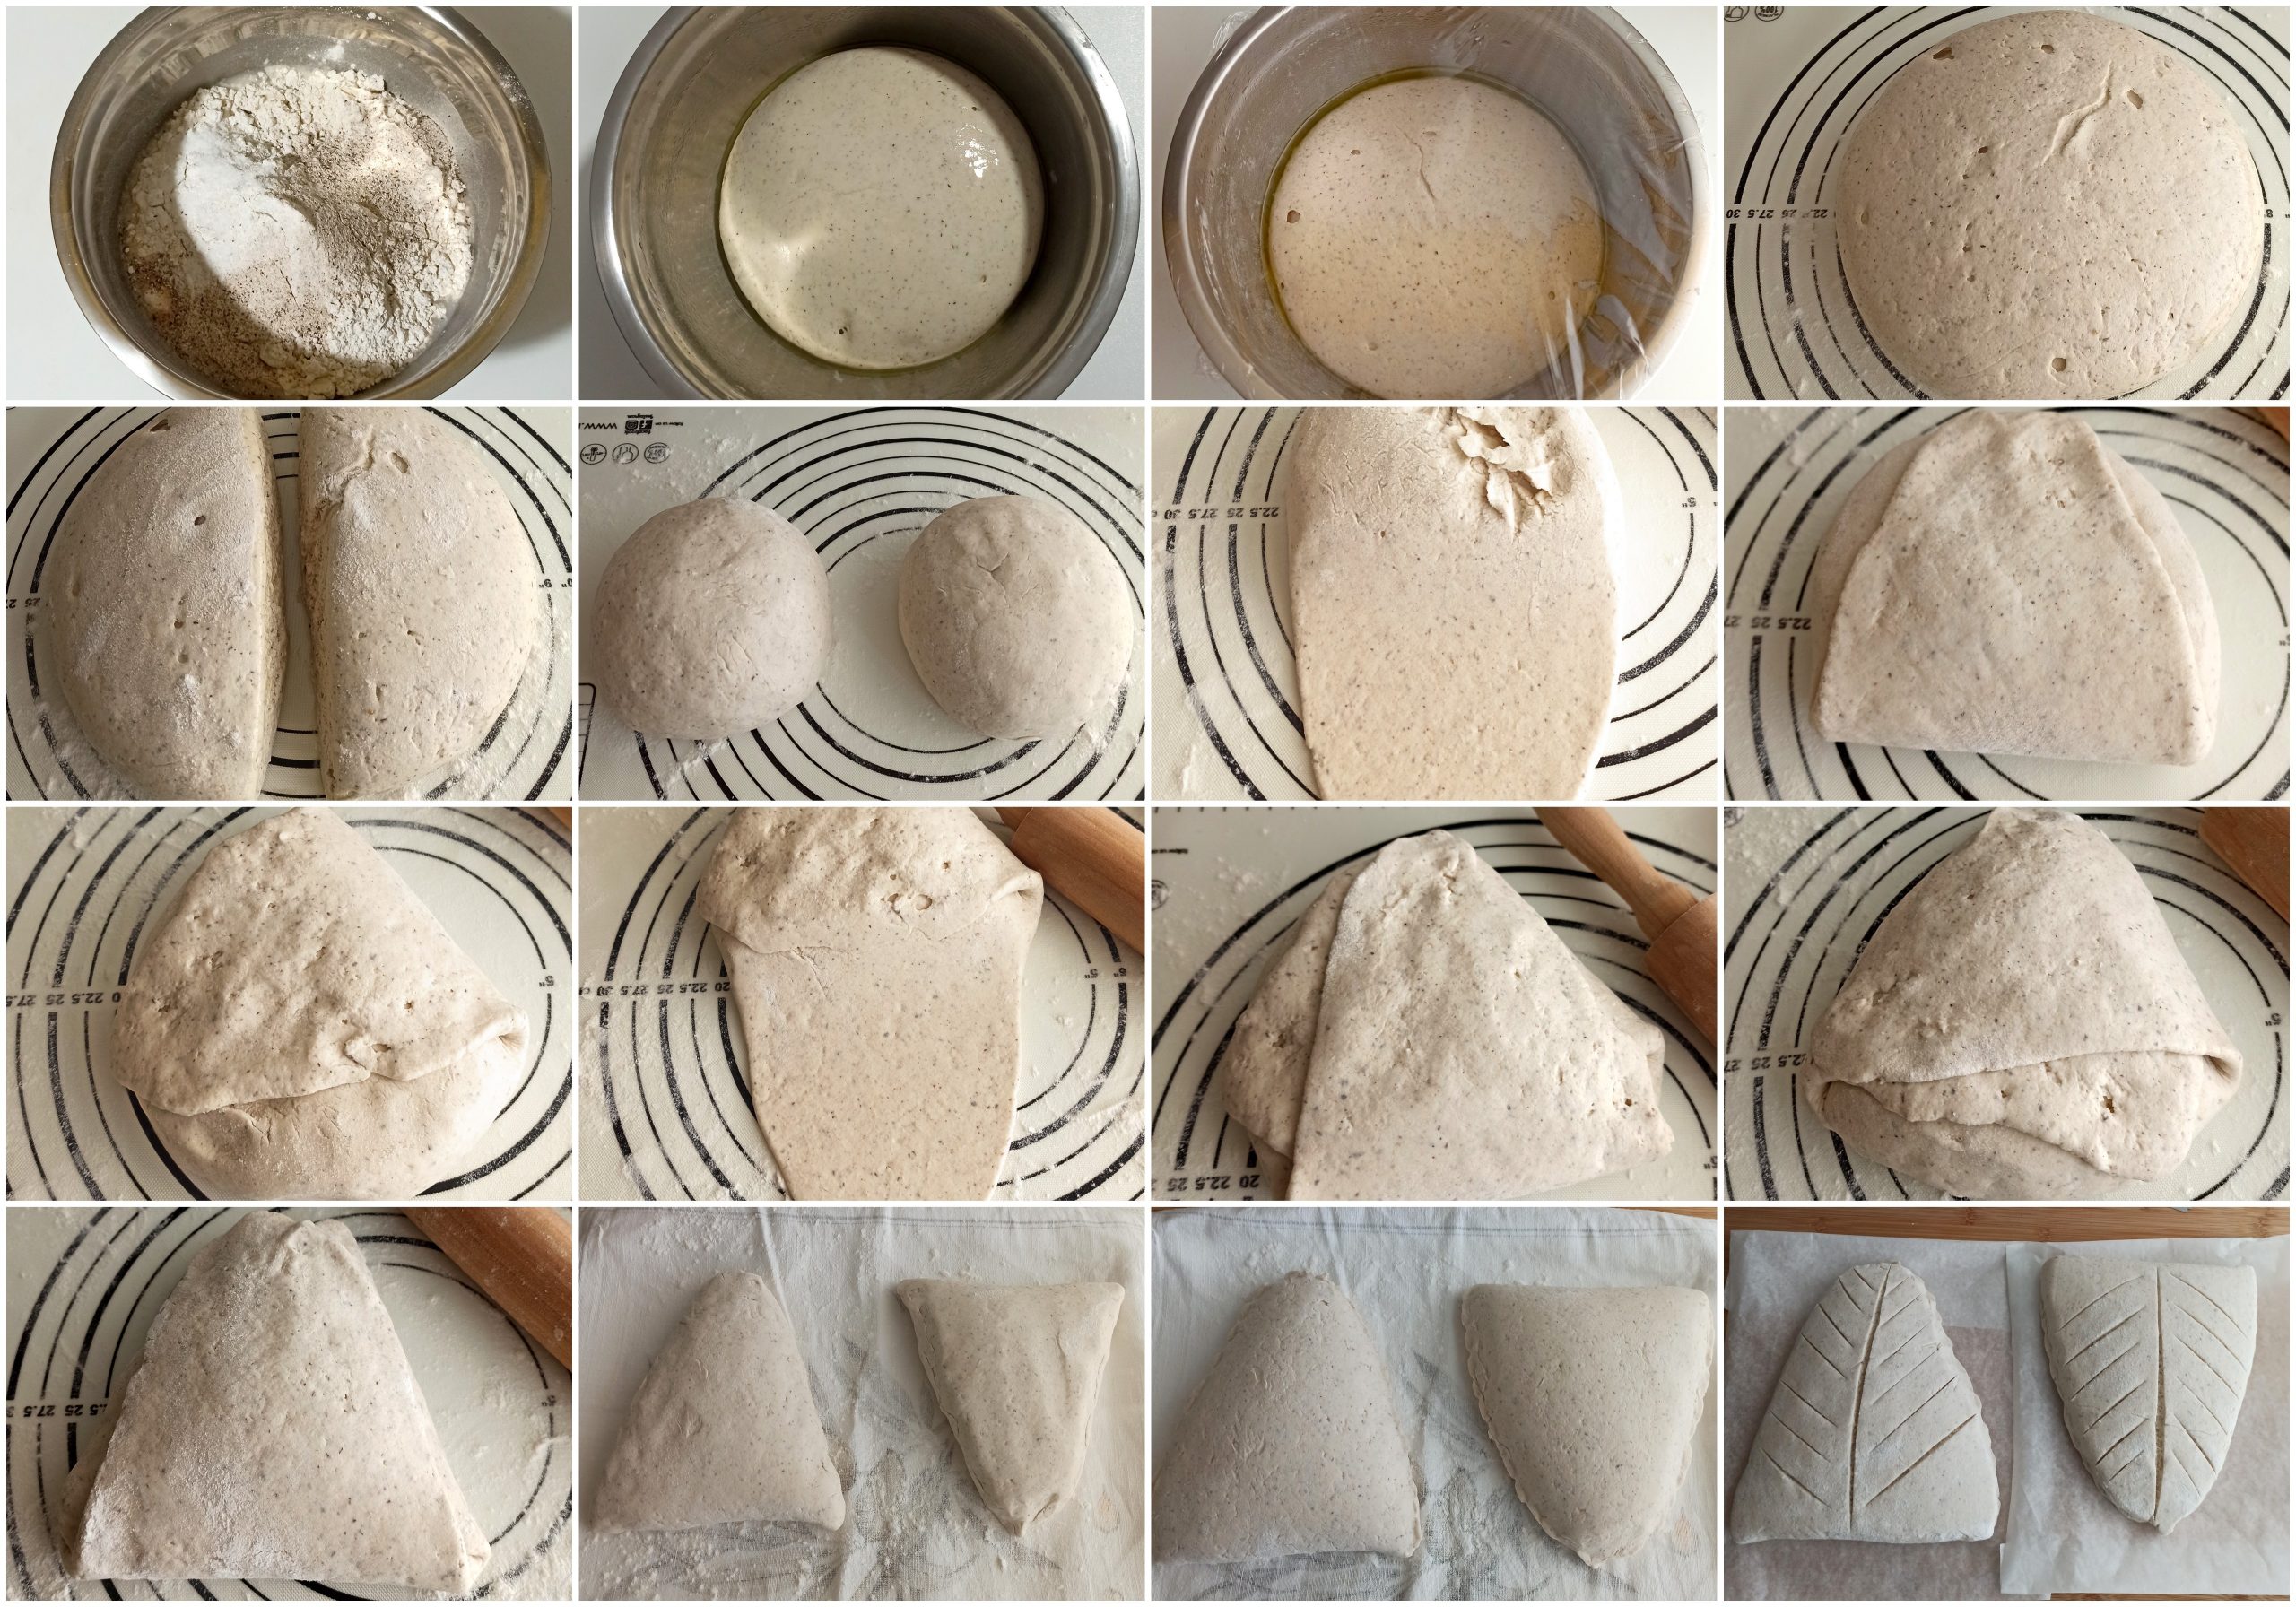 Pane integrale a foglia senza glutine - La Cassata Celiaca